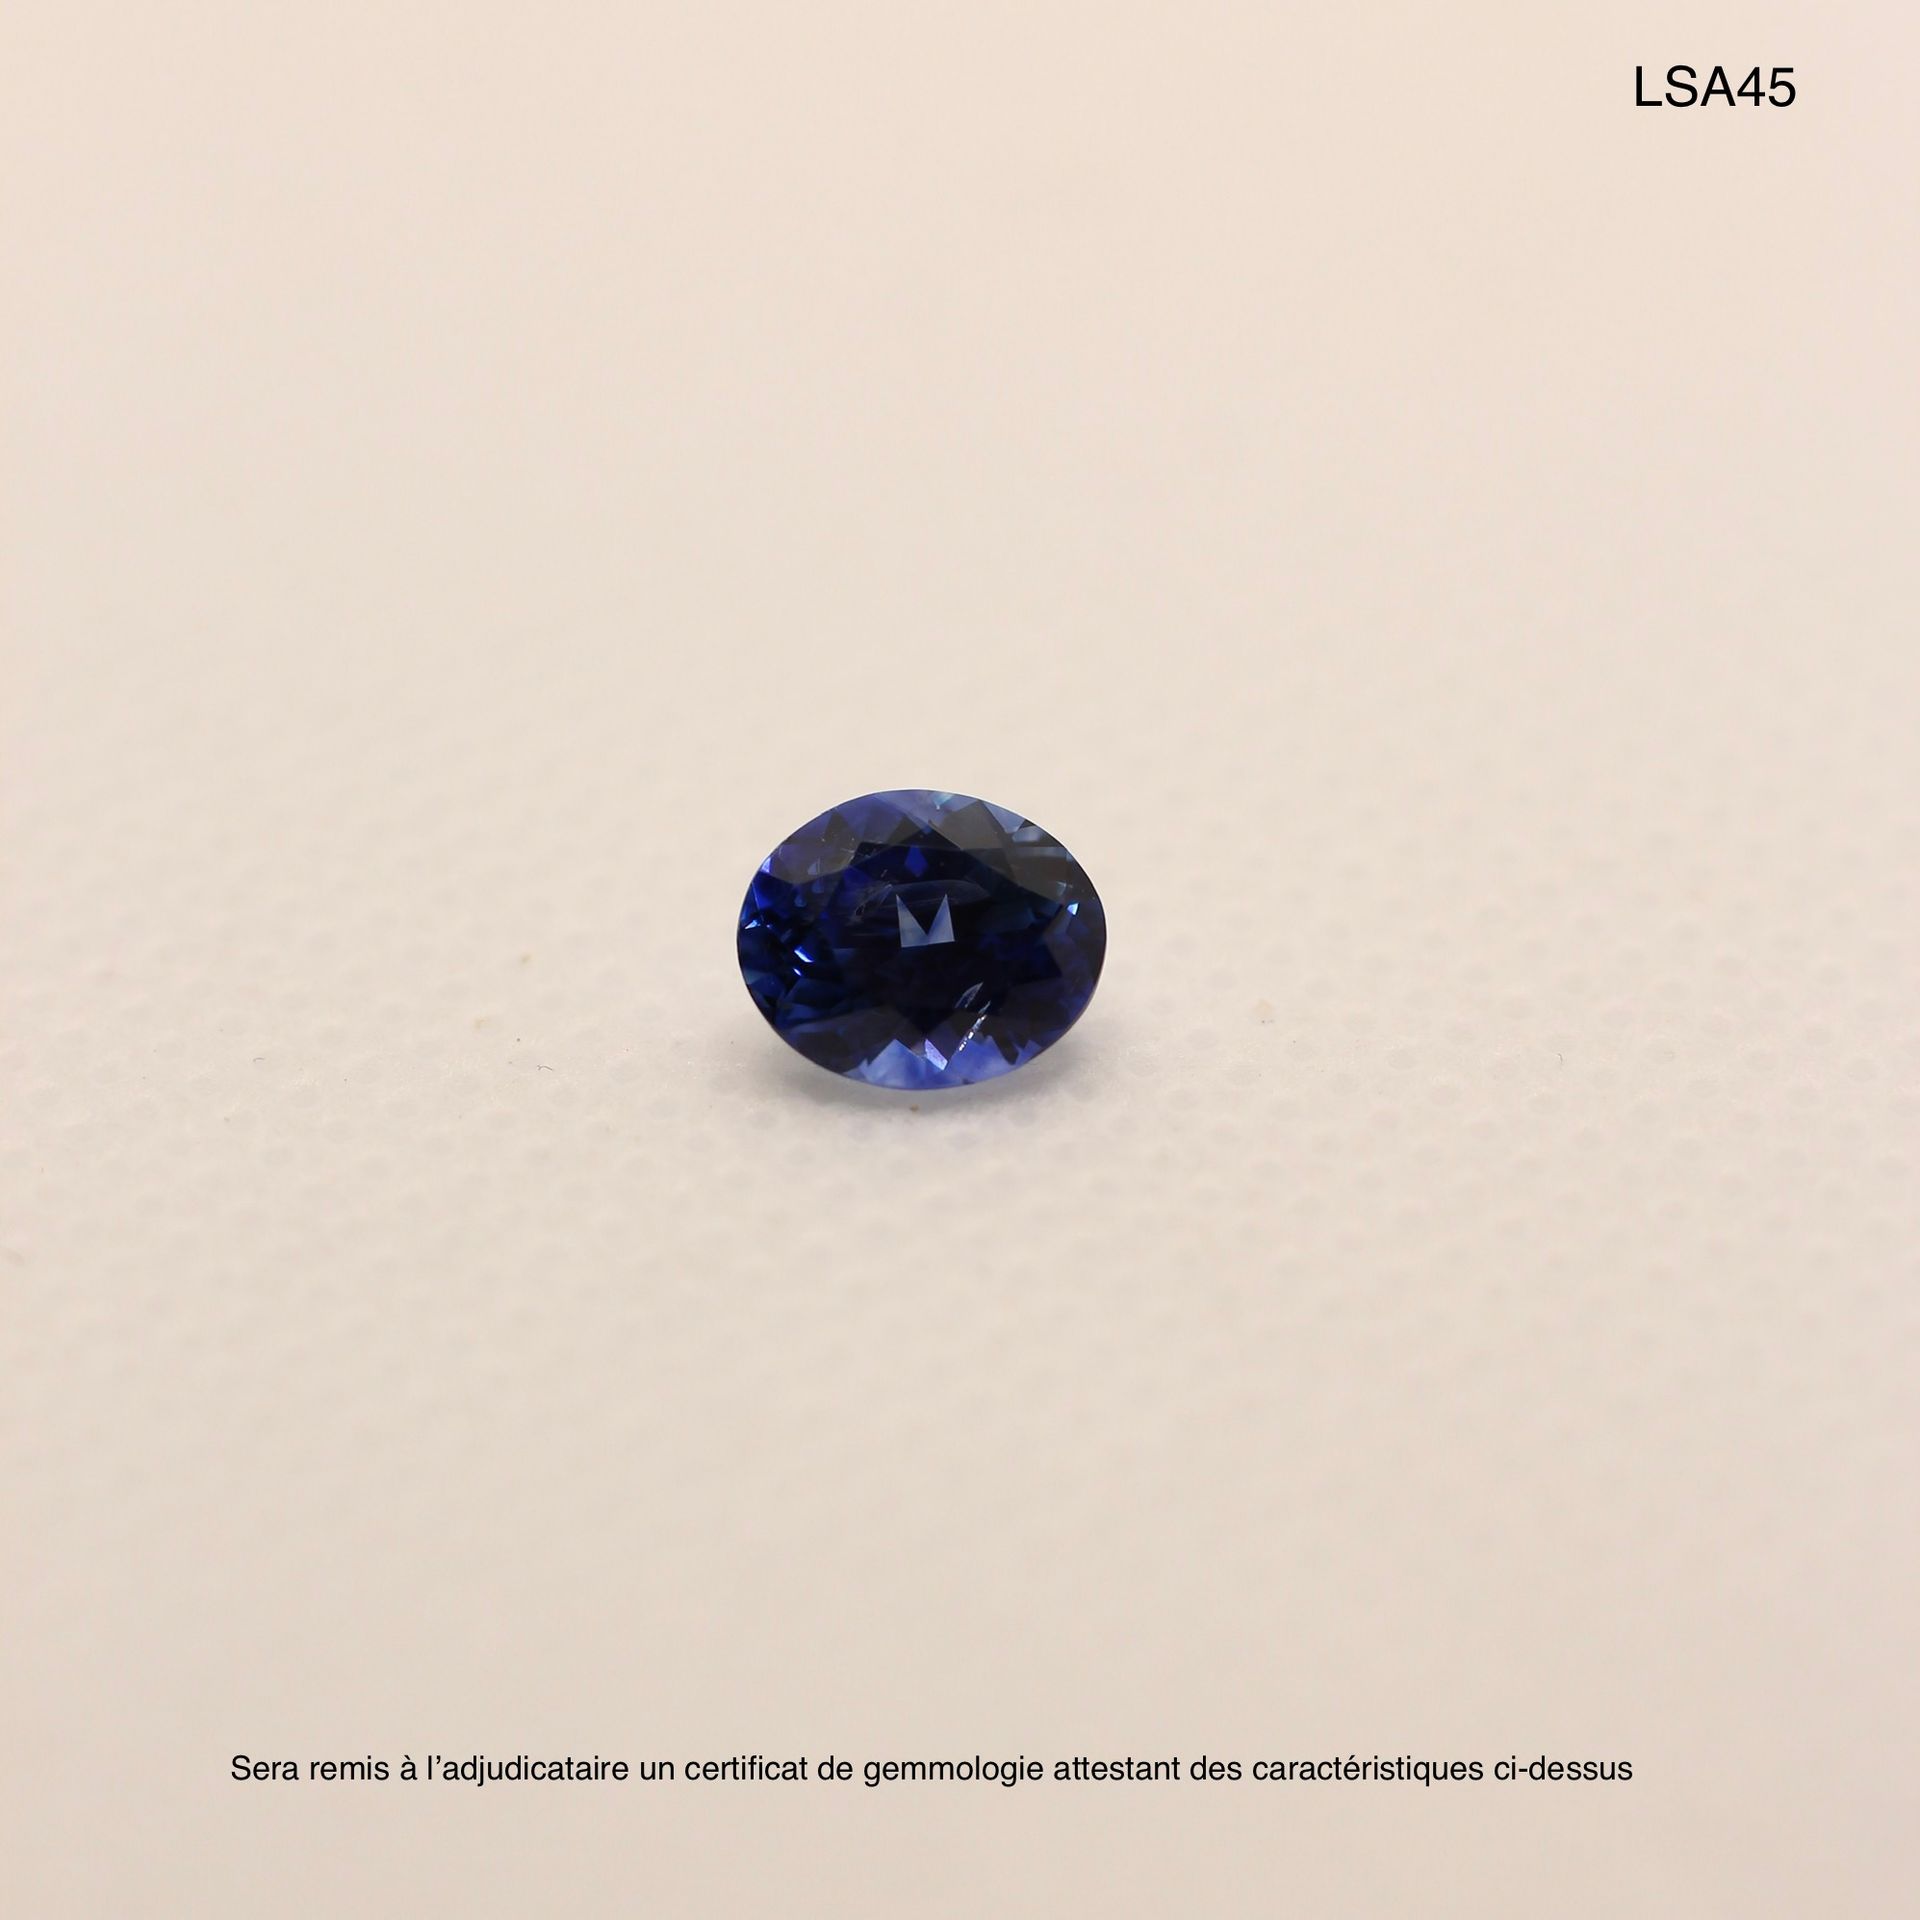 SAPHIRS TAILLÉS 拍品编号：LSA2

原产地: 马达加斯加

治疗: Ø

颜色：蓝色

形状: 梨形

尺寸：10mm x 6.2mm x 4&hellip;